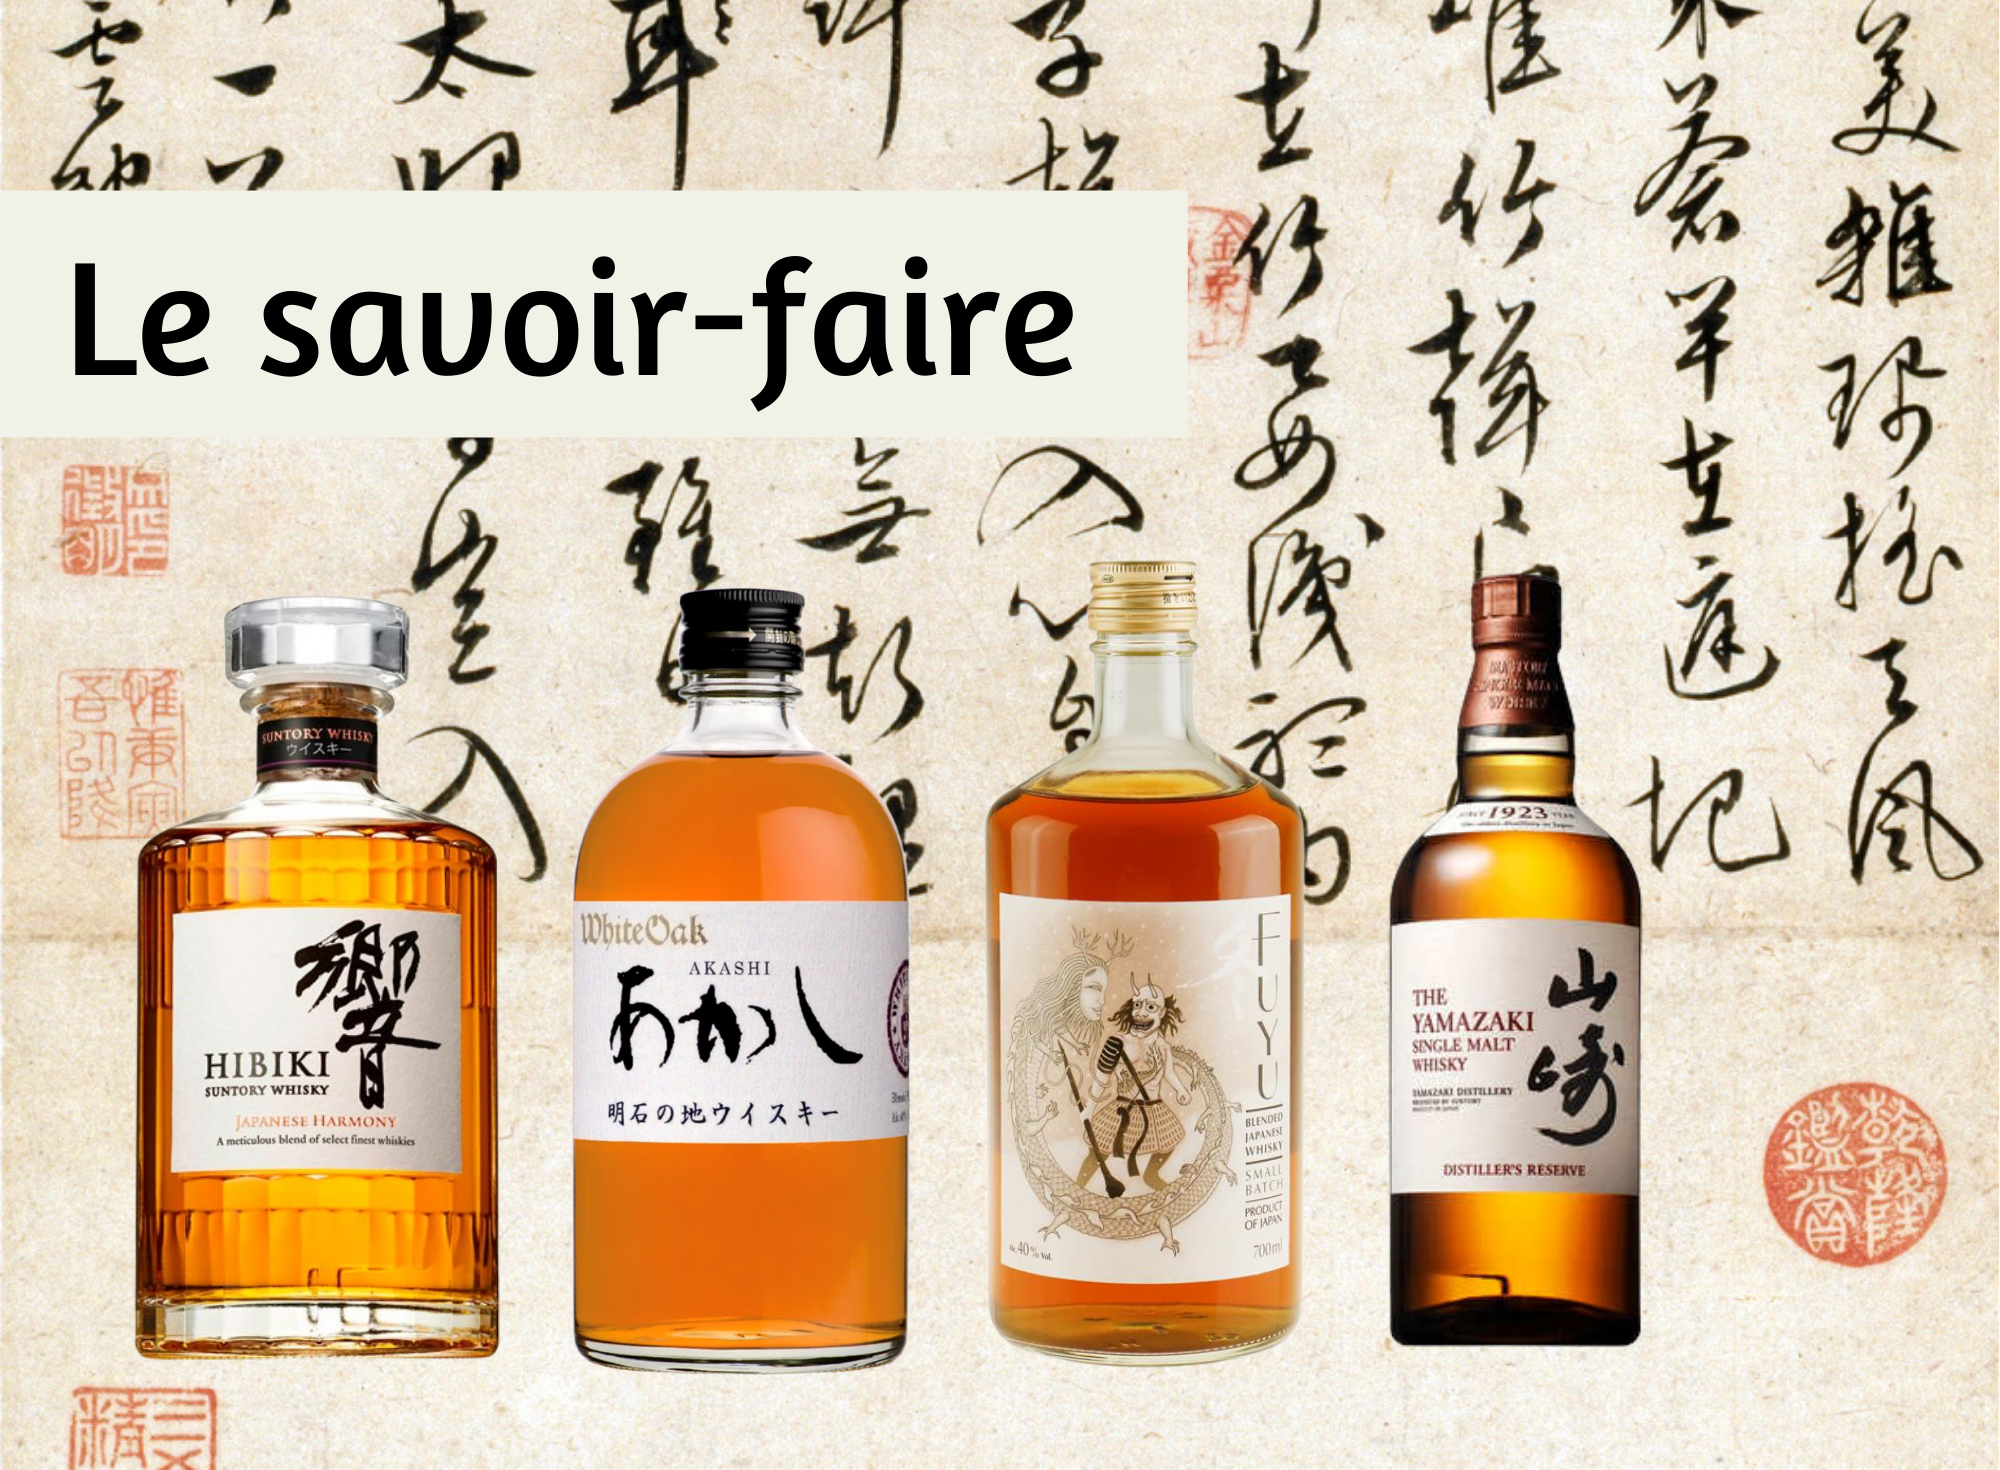 Whiskies Togouchi : Coffret Togouchi Premium - Whiskies du Monde